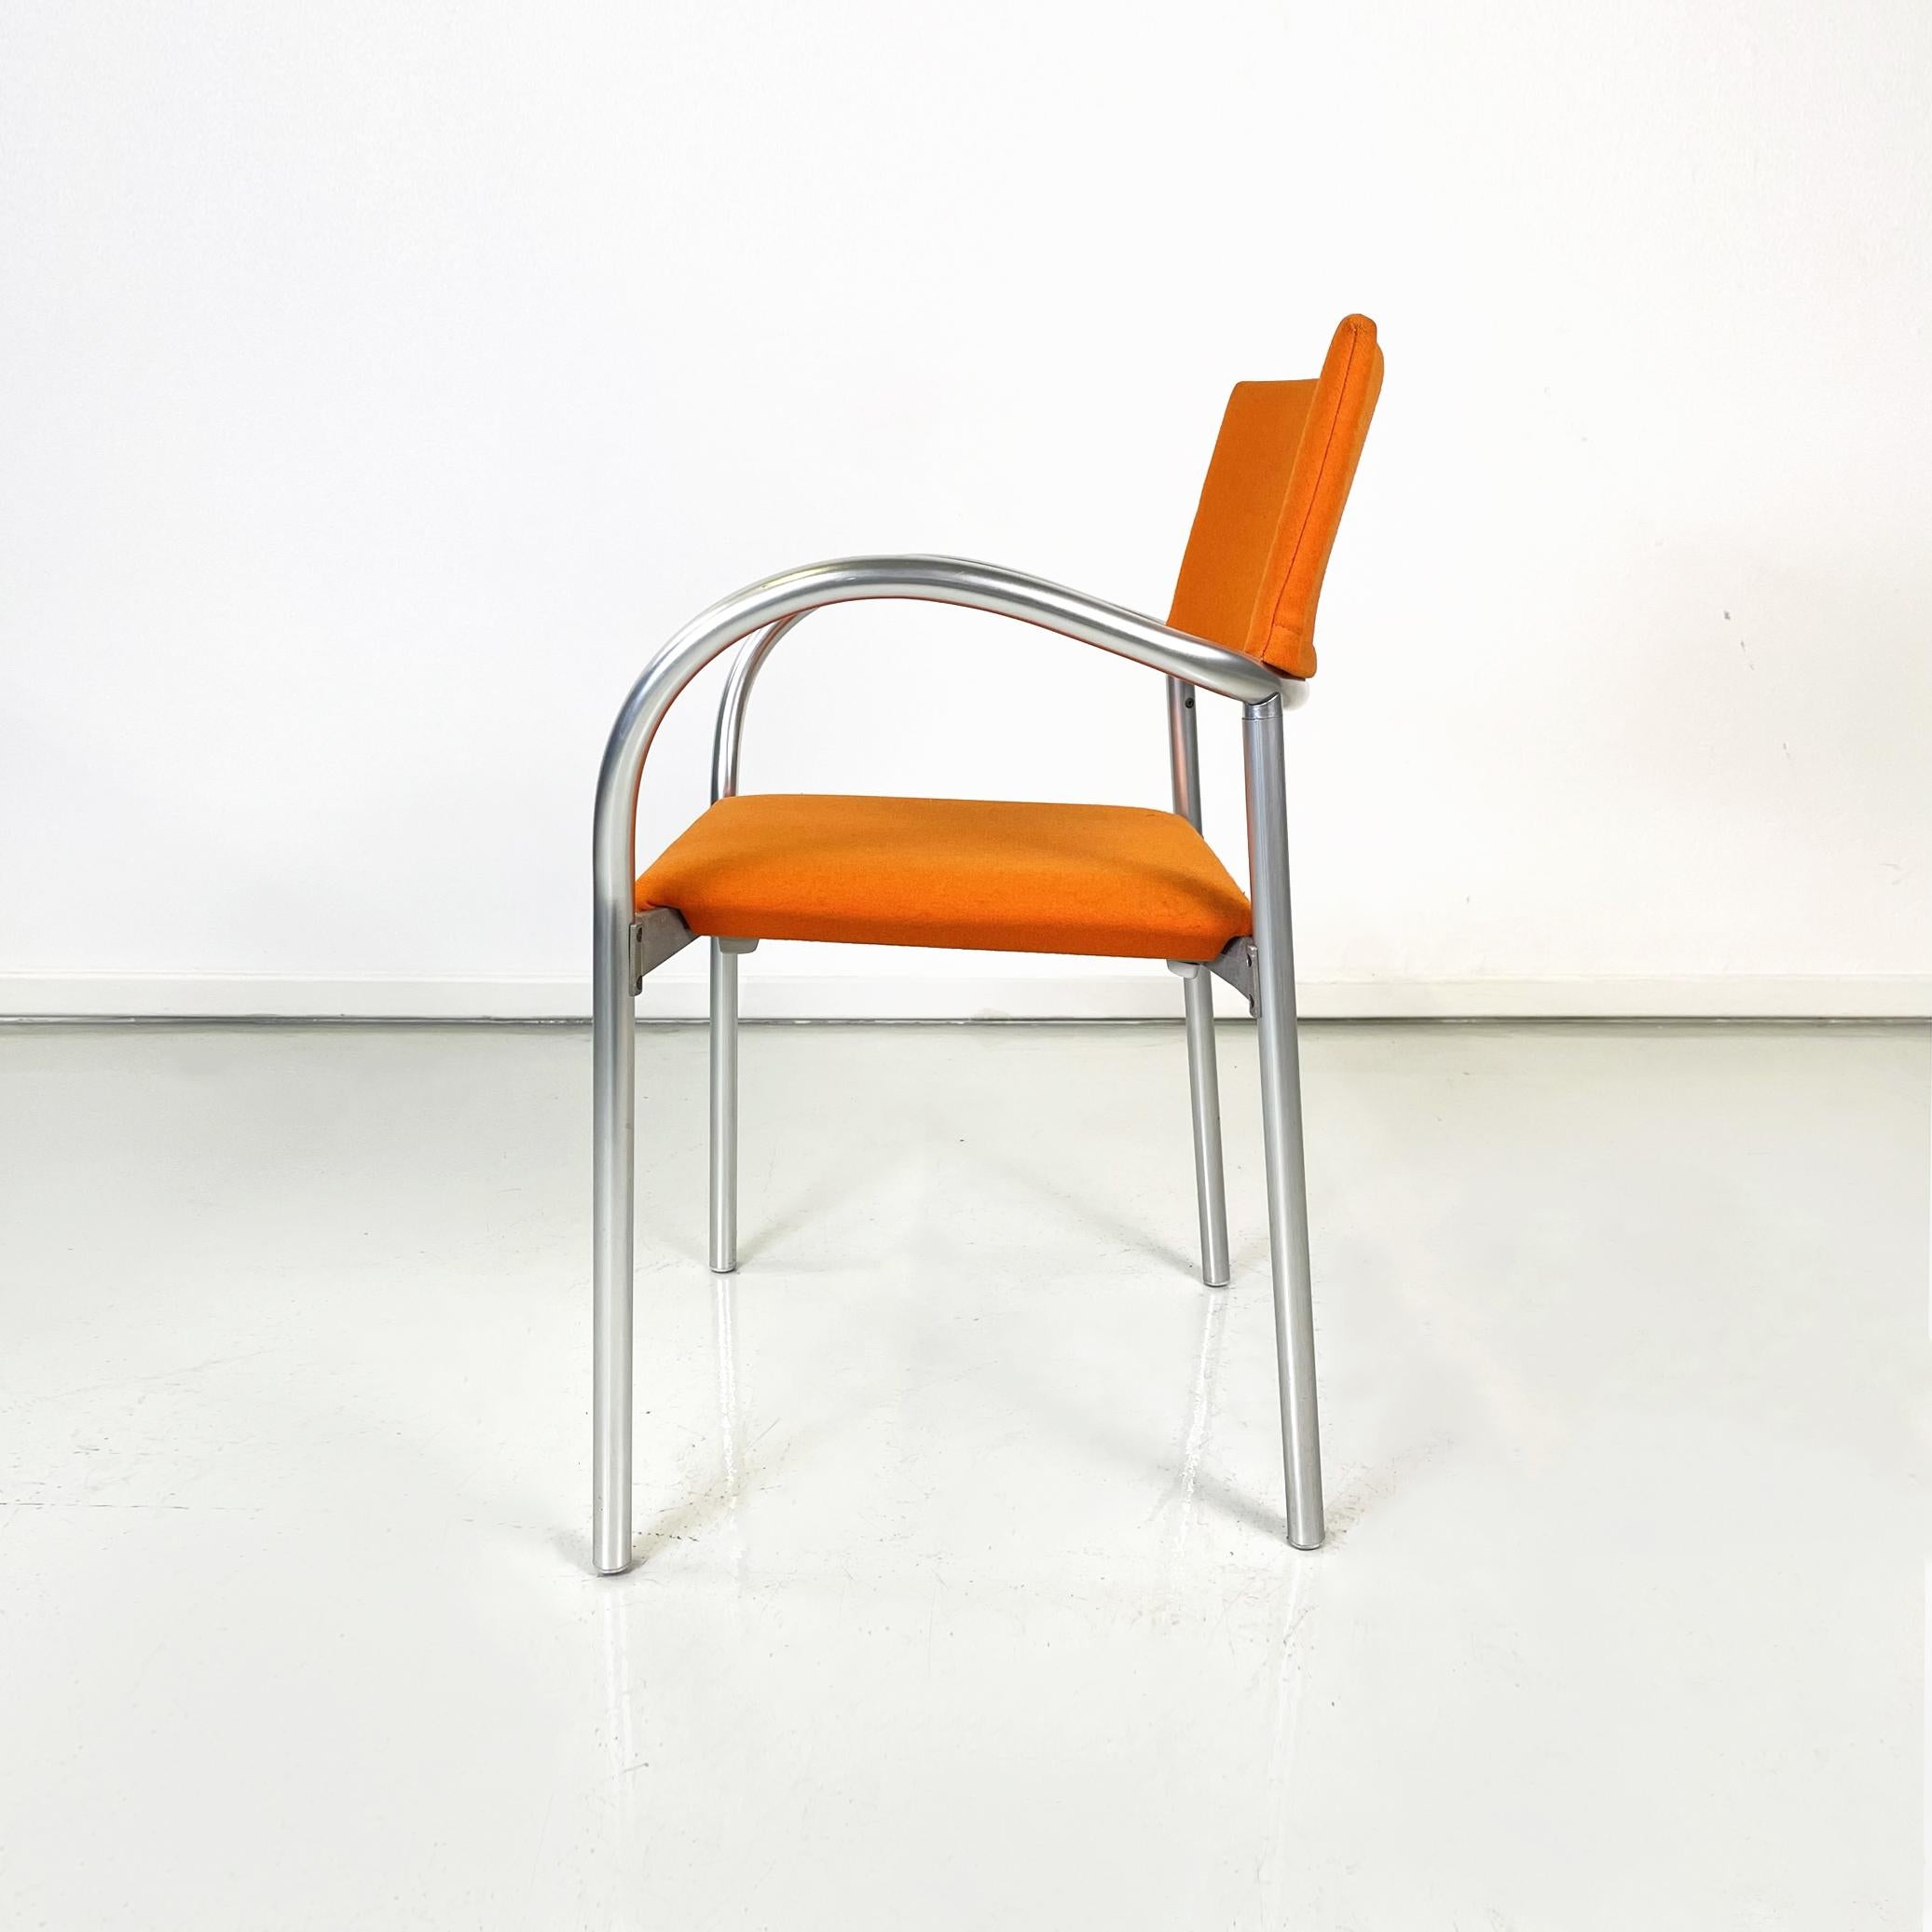 Late 20th Century Italian Modern Orange Fabric Chairs Mod, Breeze by Bartoli for Segis, 1980s For Sale